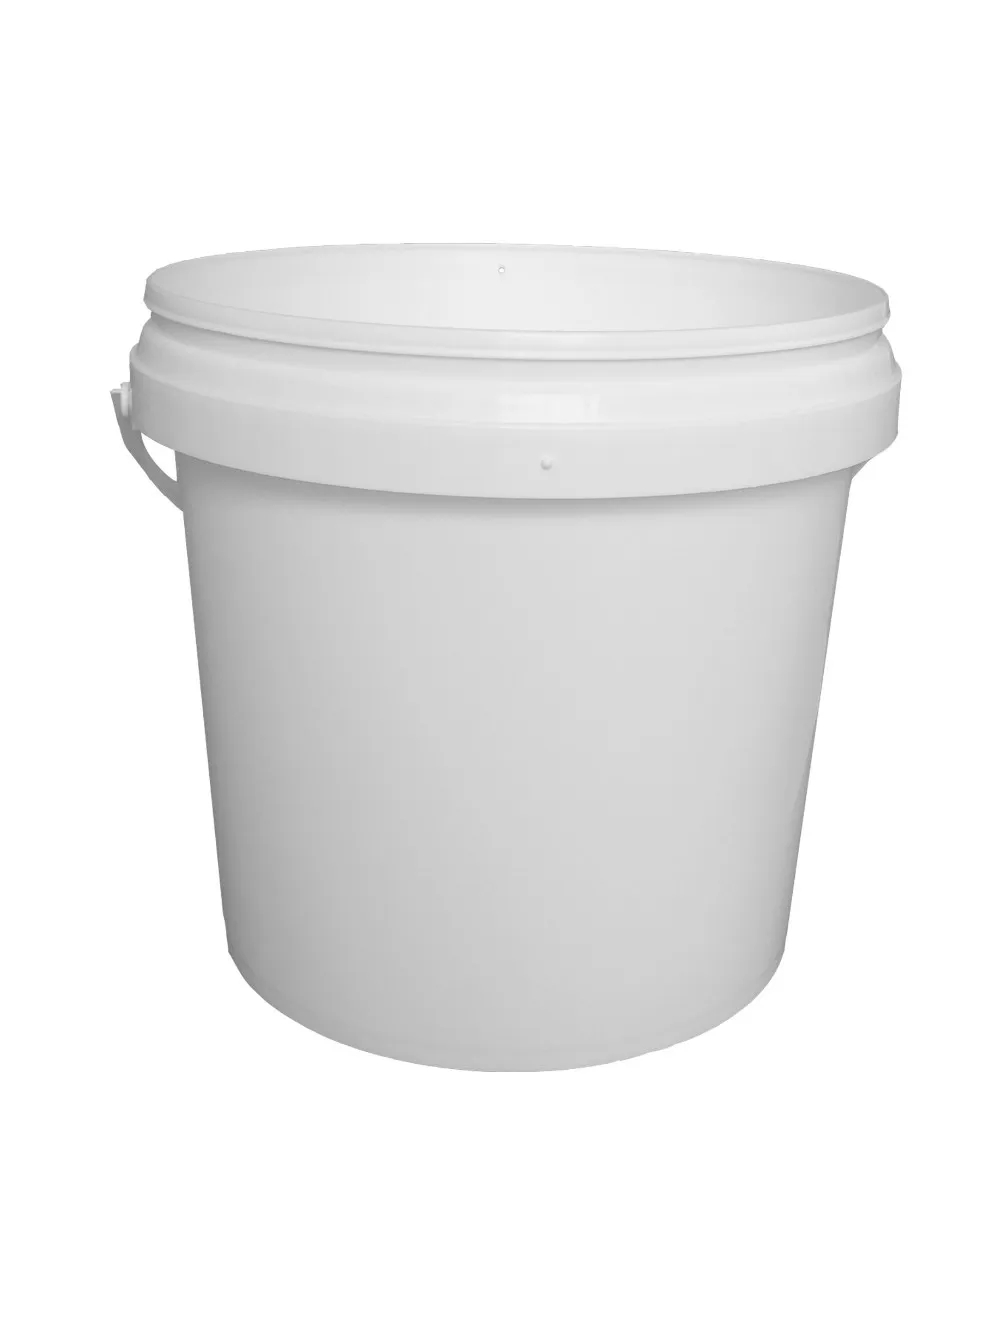 Plastic Buckets With Lids 10l /20l/25l - Buy Plastic Buckets With Lids